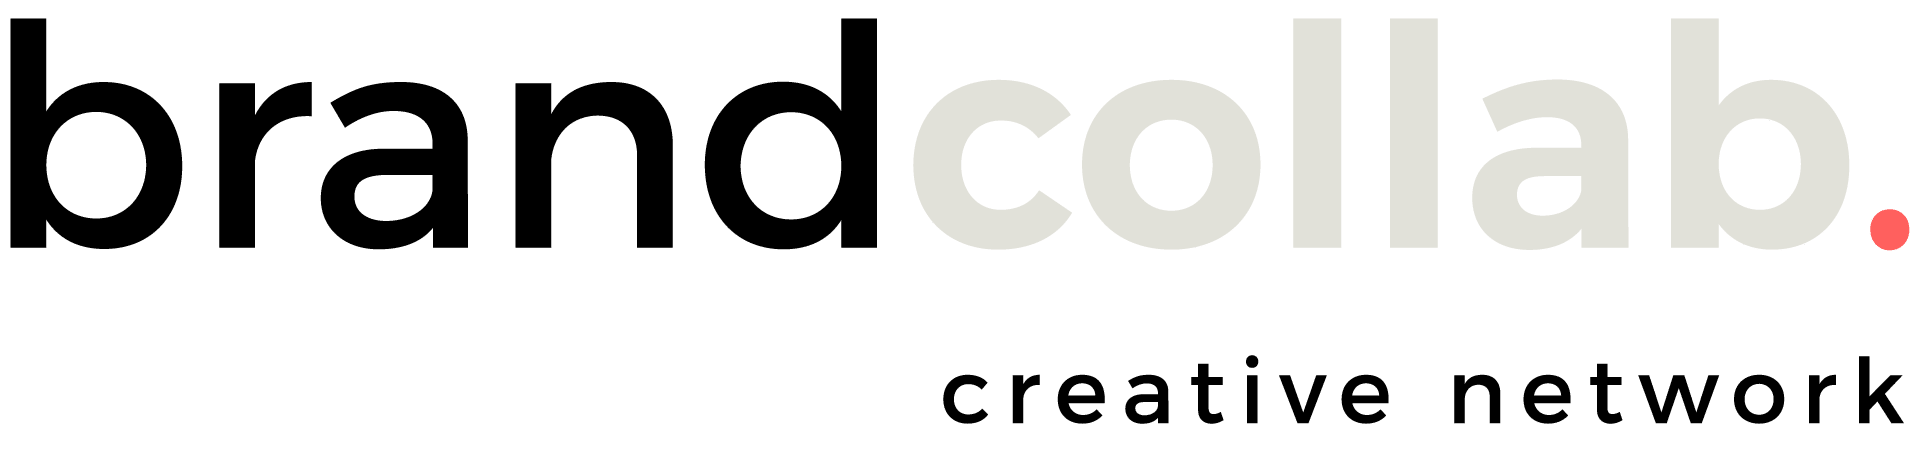 brandcollab - Creative Network - Marketingagentur - Gründercoaching